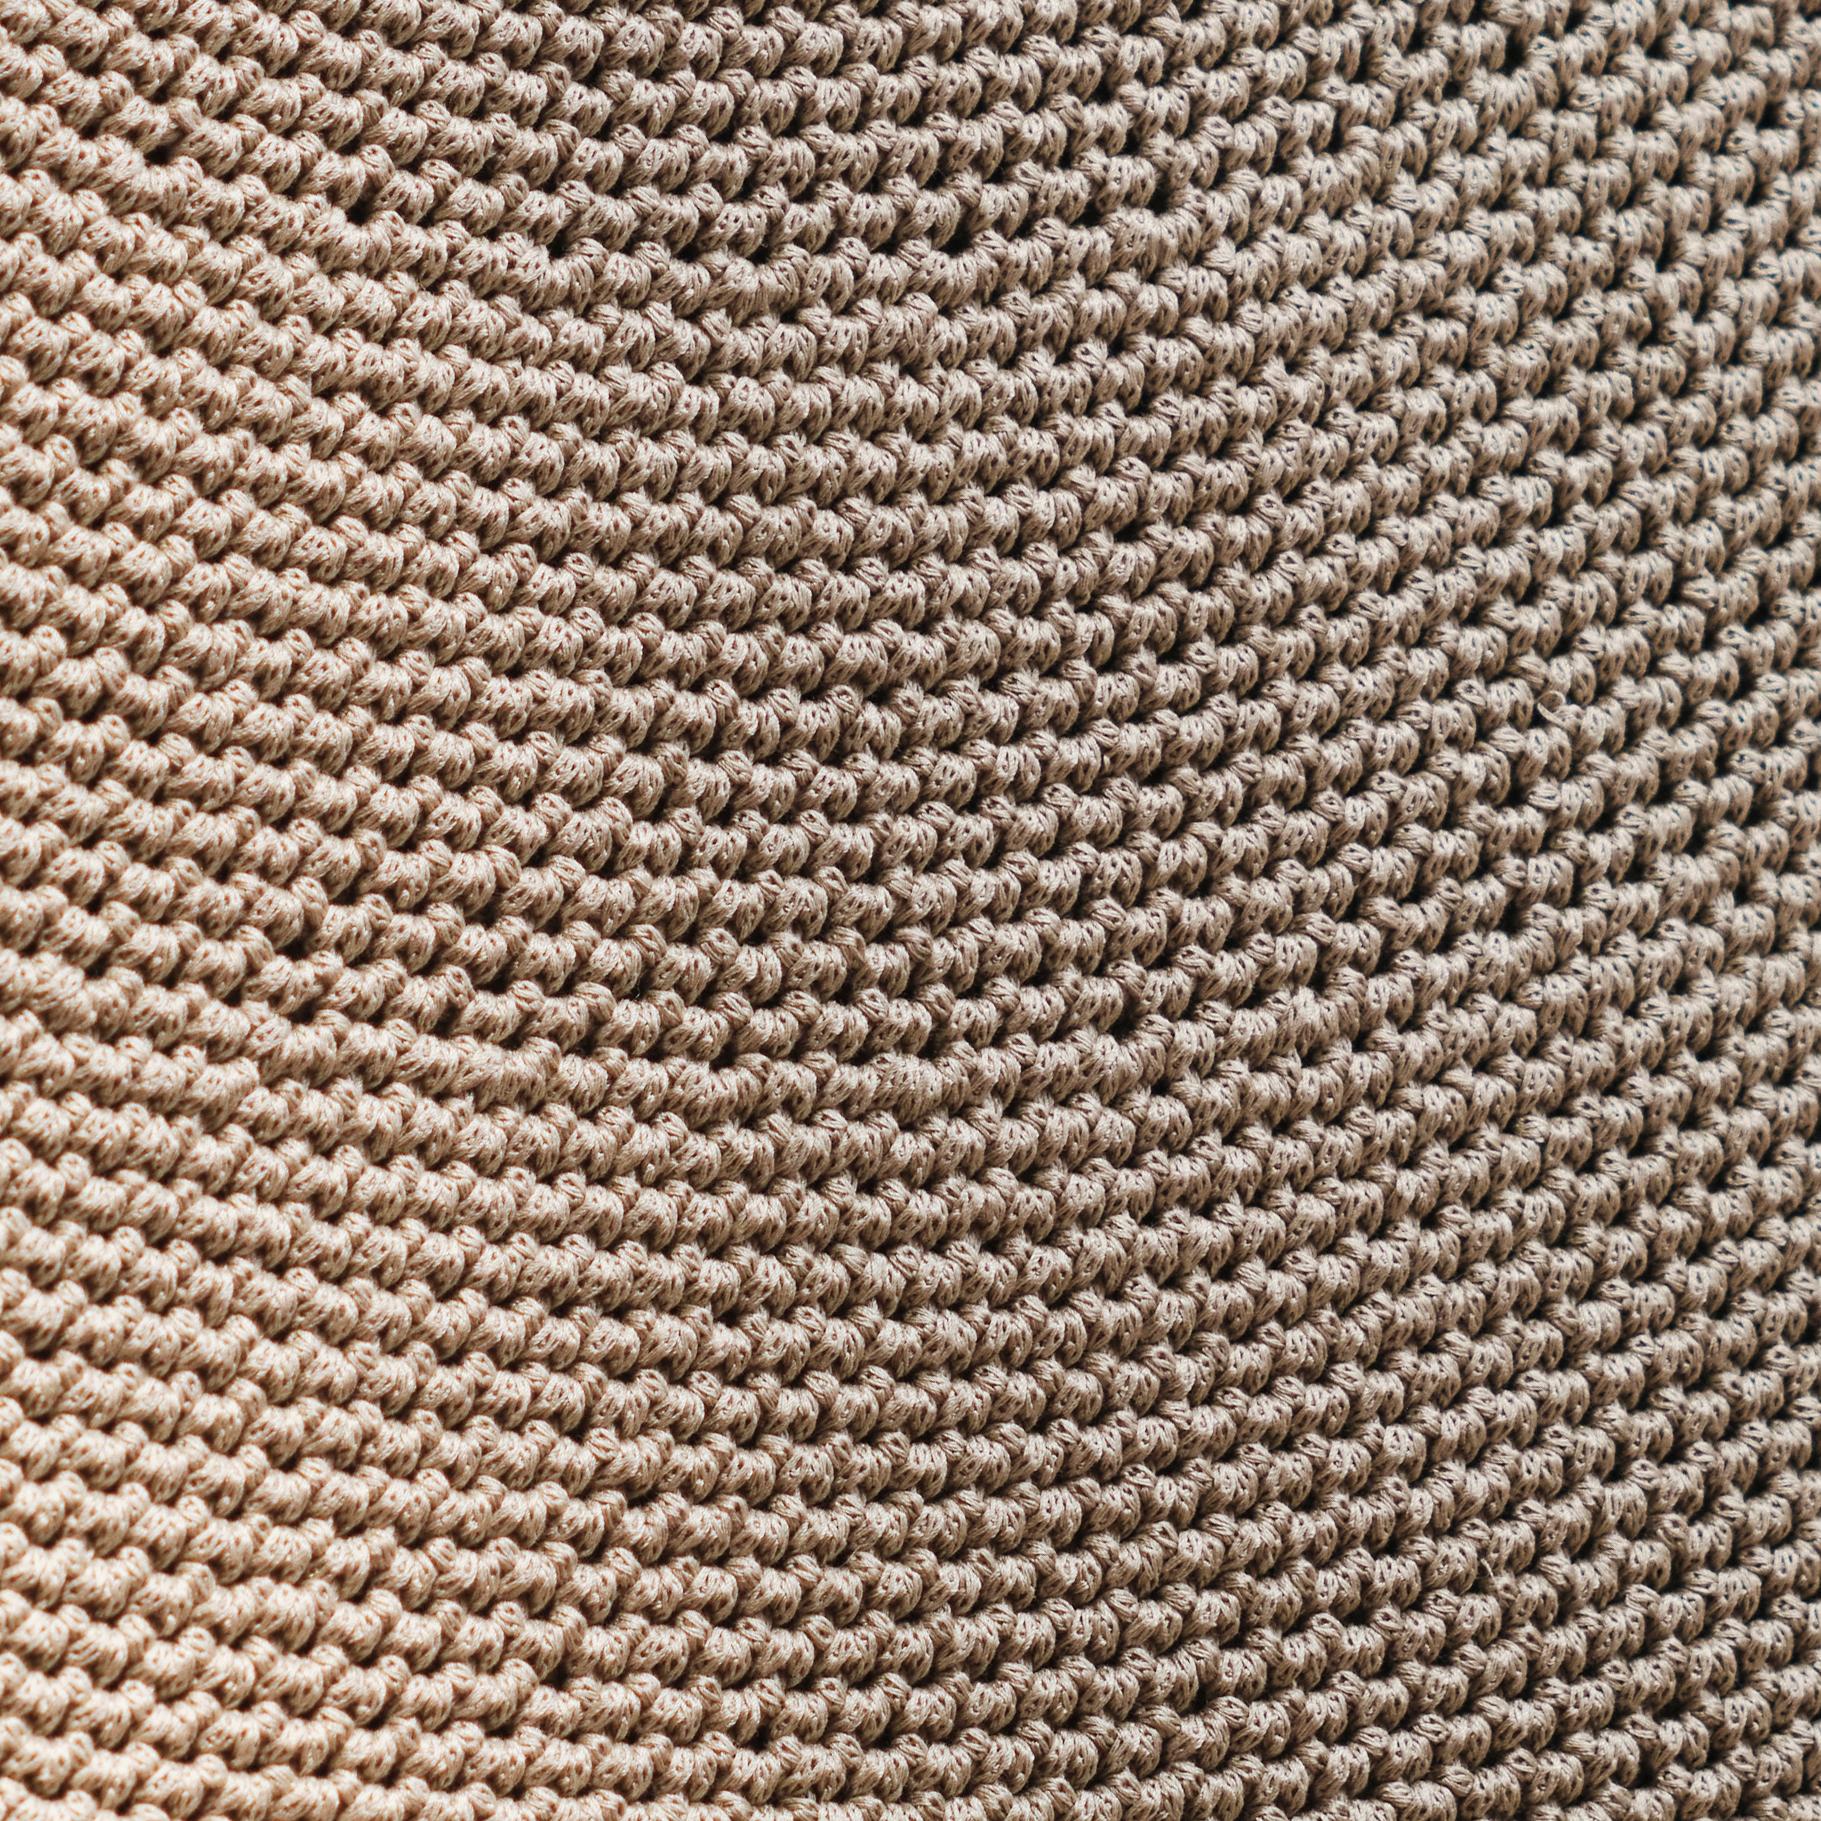 British GLÜCK Pendant Light Ø80cm/31.5in, Hand Crocheted in 100% Egyptian Cotton For Sale